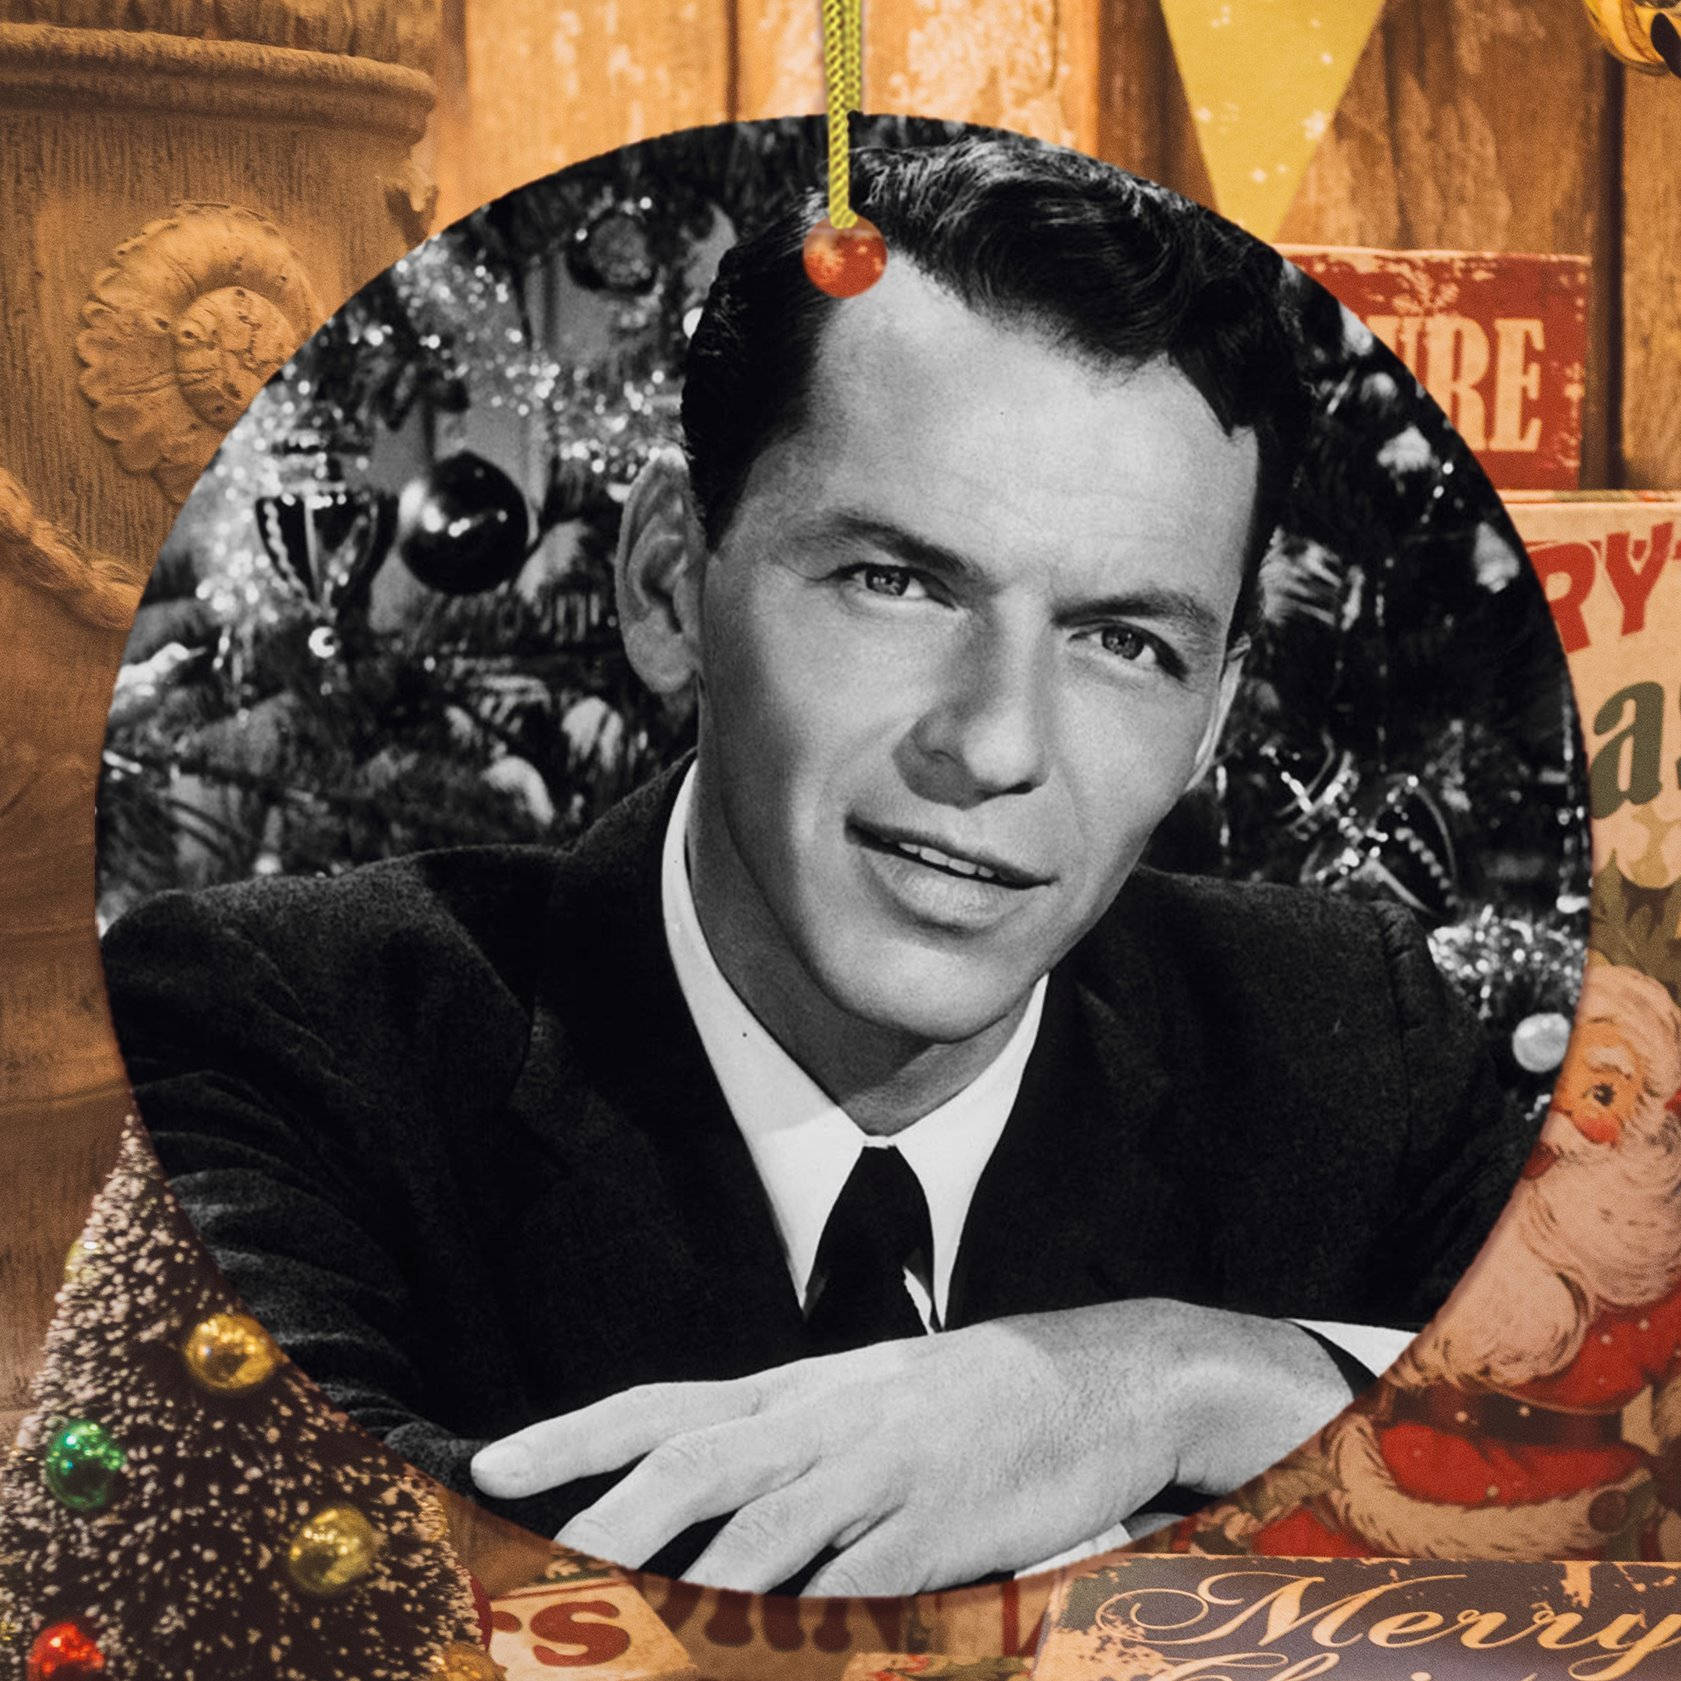 Frank Sinatra Christmas-Themed Poster Wallpaper